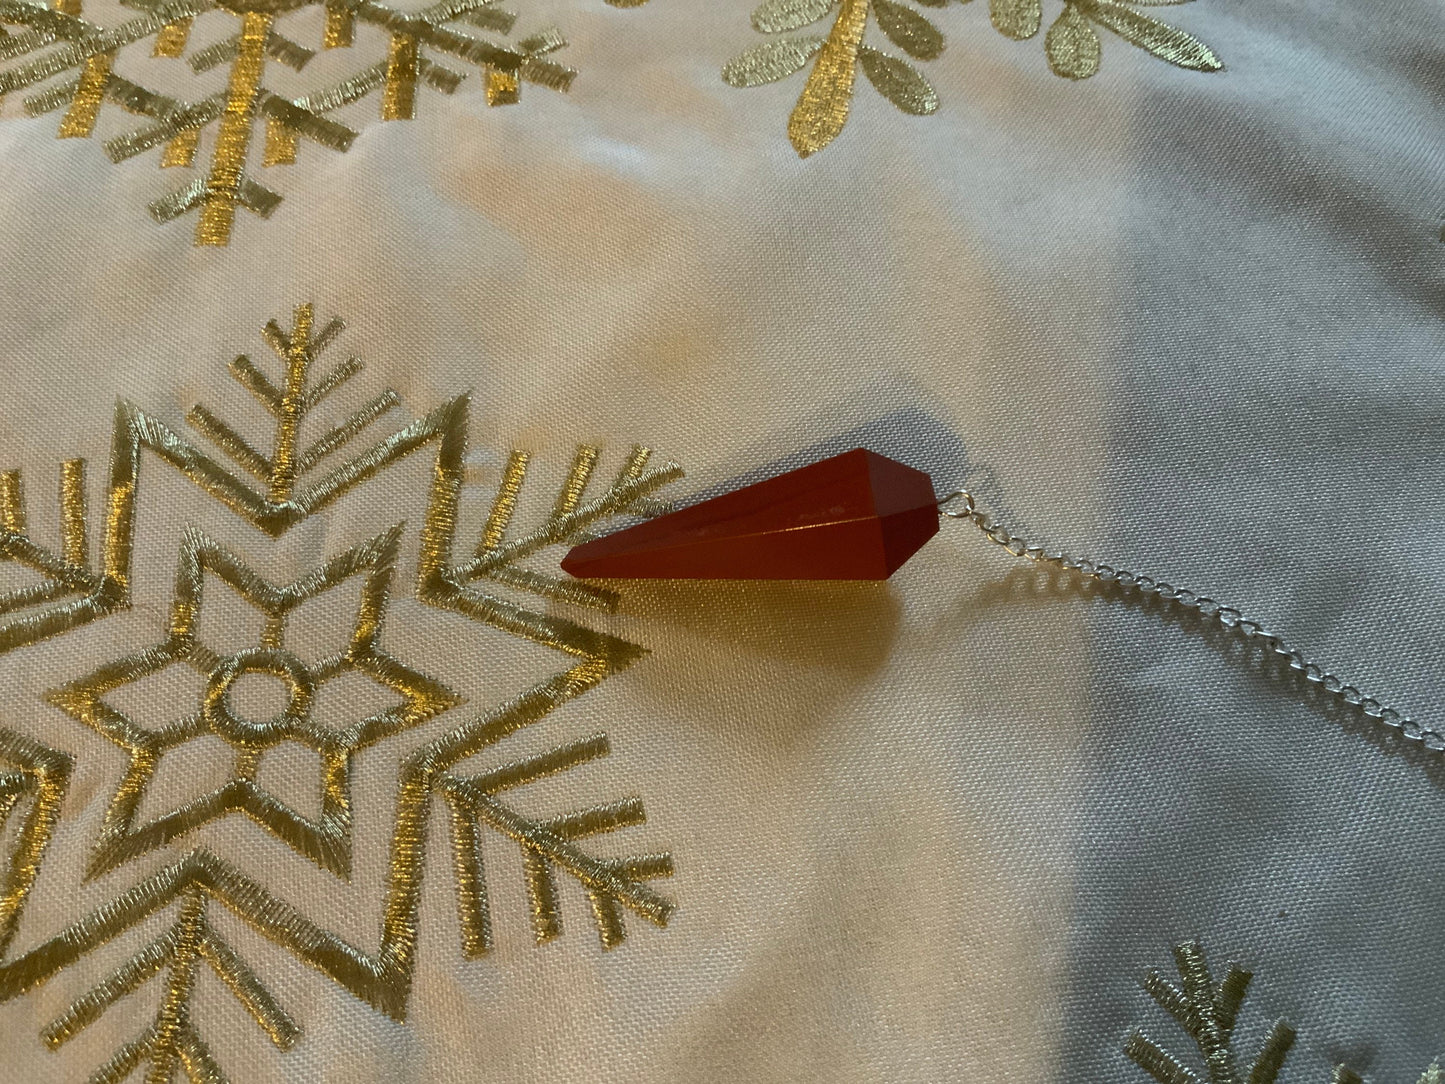 Red Jasper Pendulum 1.75 + inches